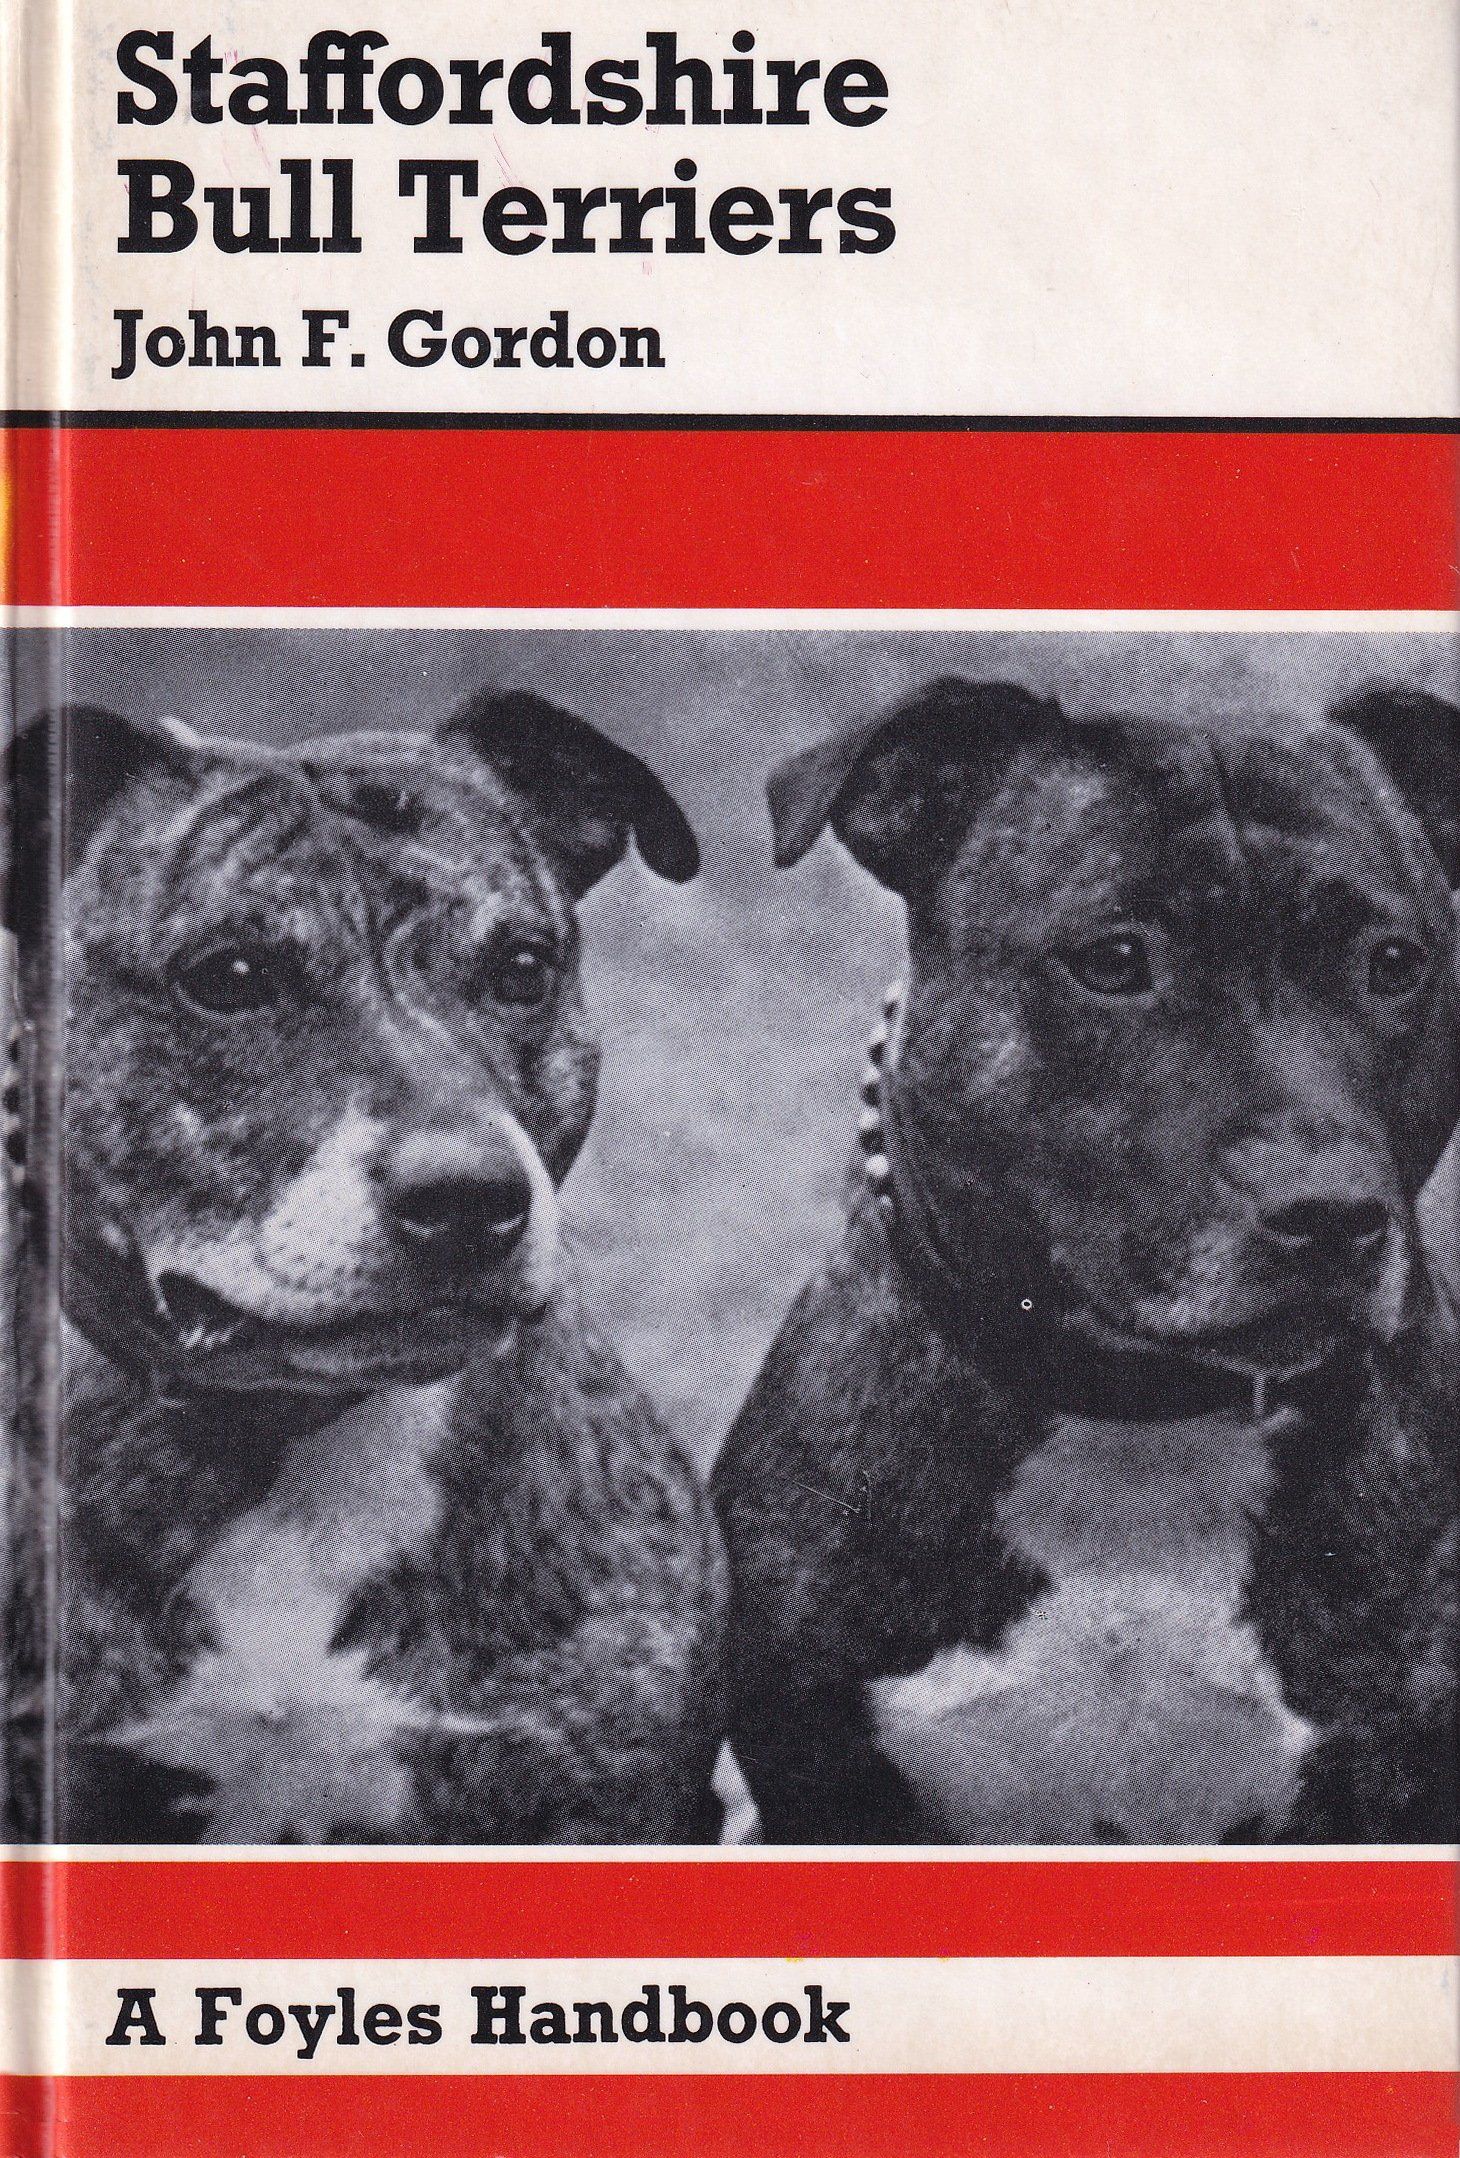 Staffordshire Bull Terriers by John F Gordon (Foyles Handbook)